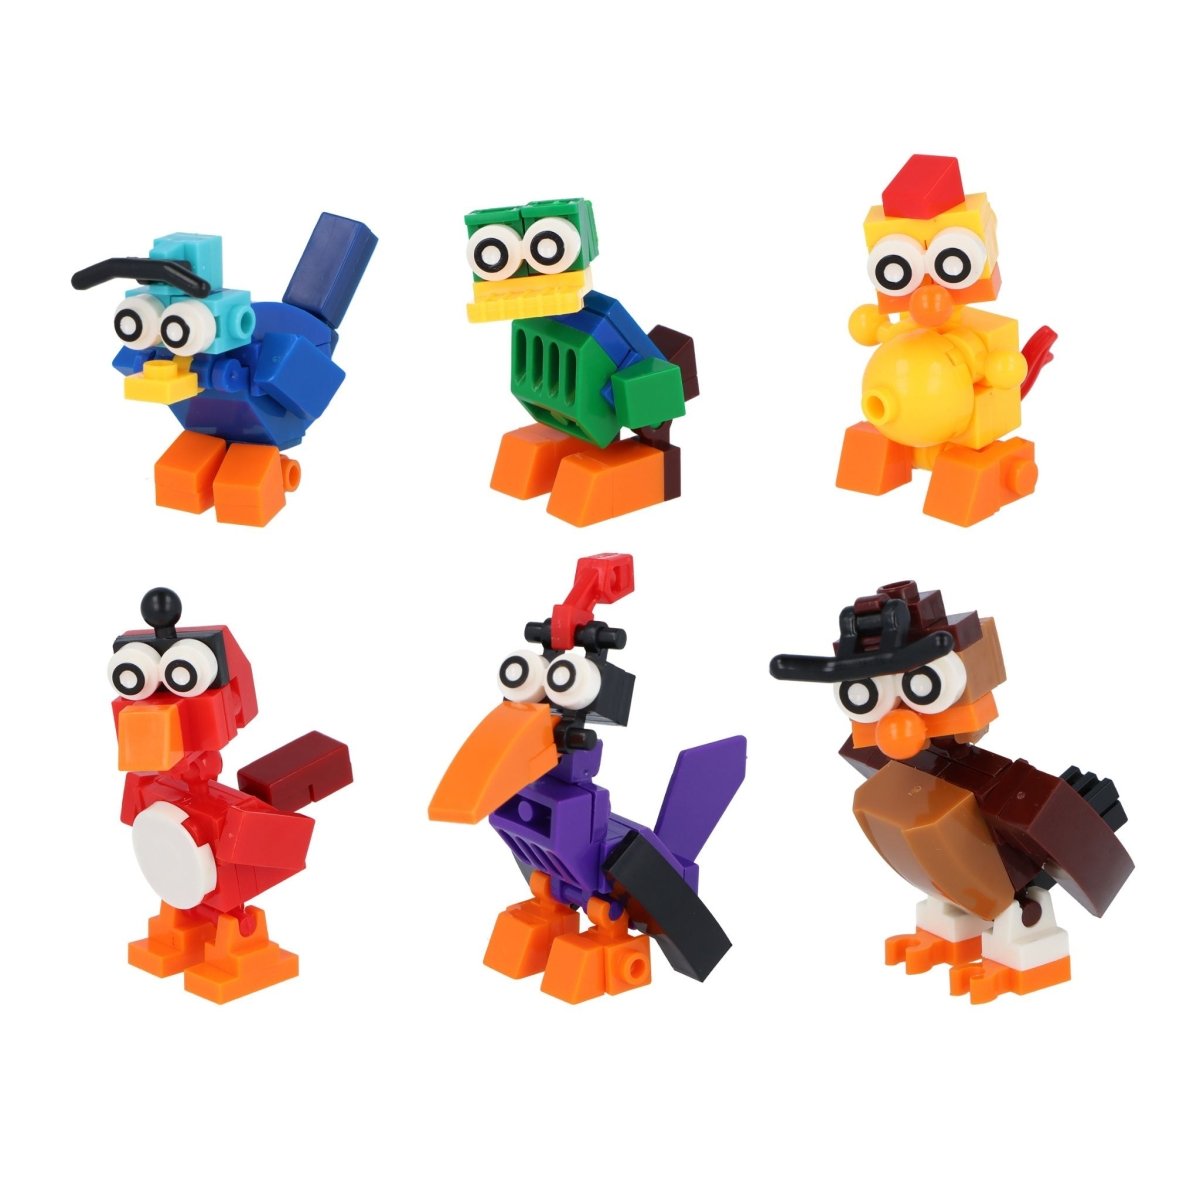 Bird Block Kit - Kids Party Craft